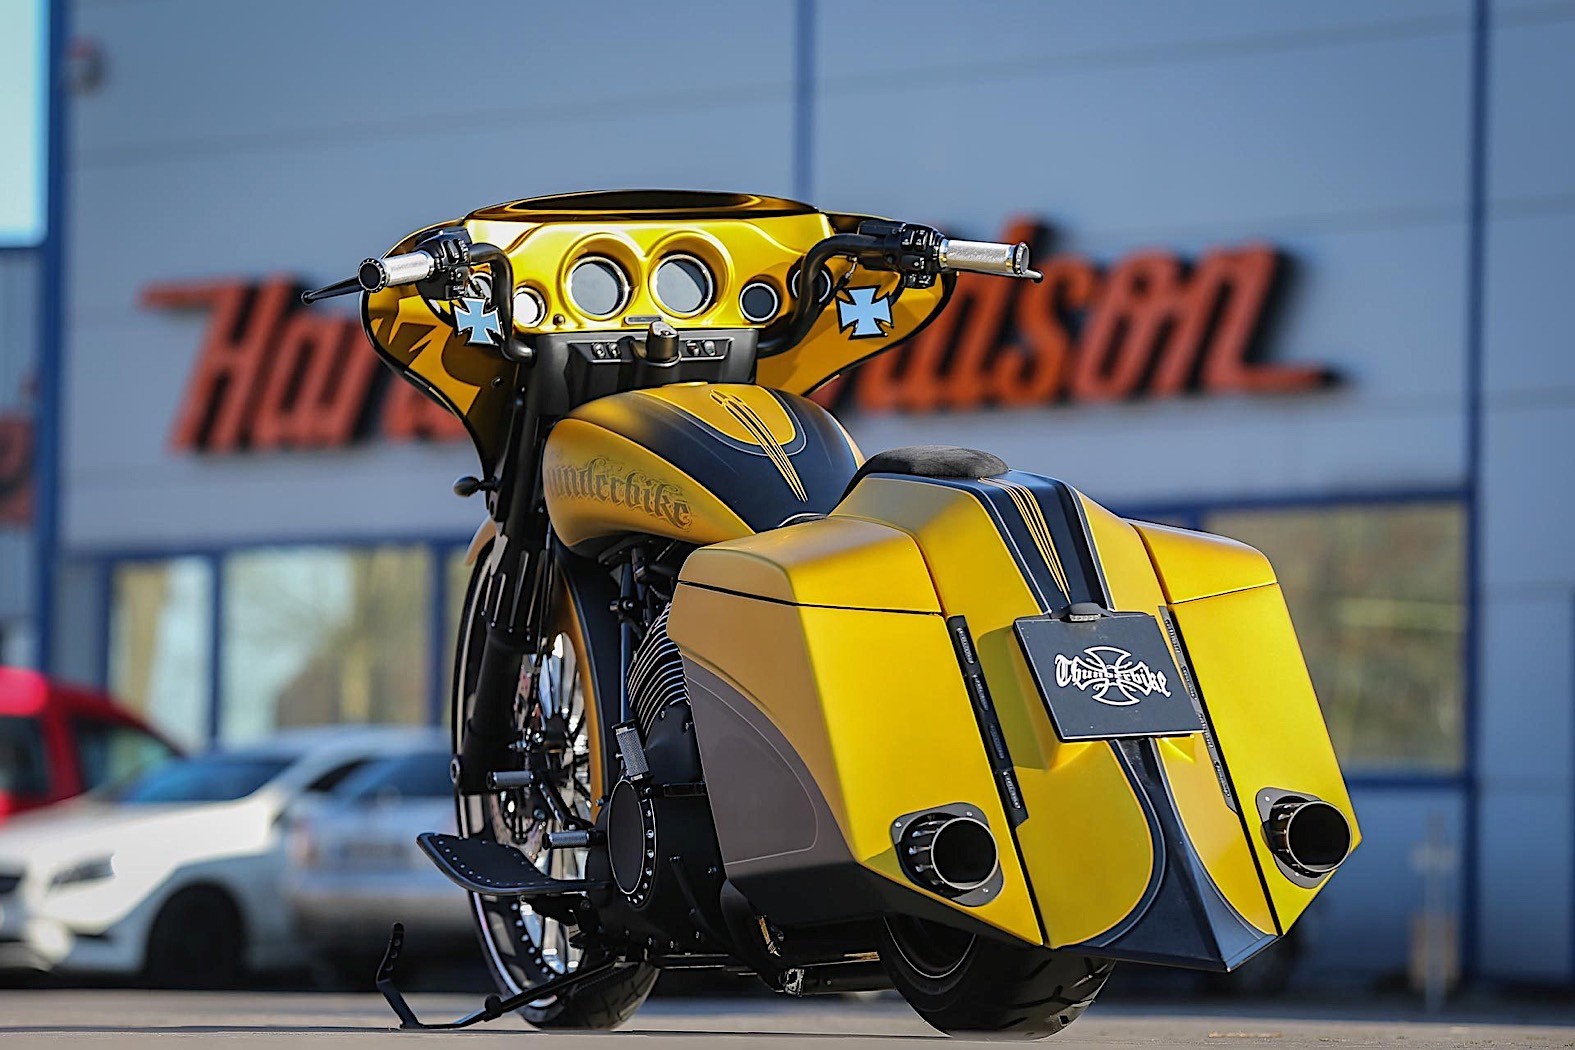 HarleyDavidson Daytona Is a Feline Bagger With an Attitude autoevolution